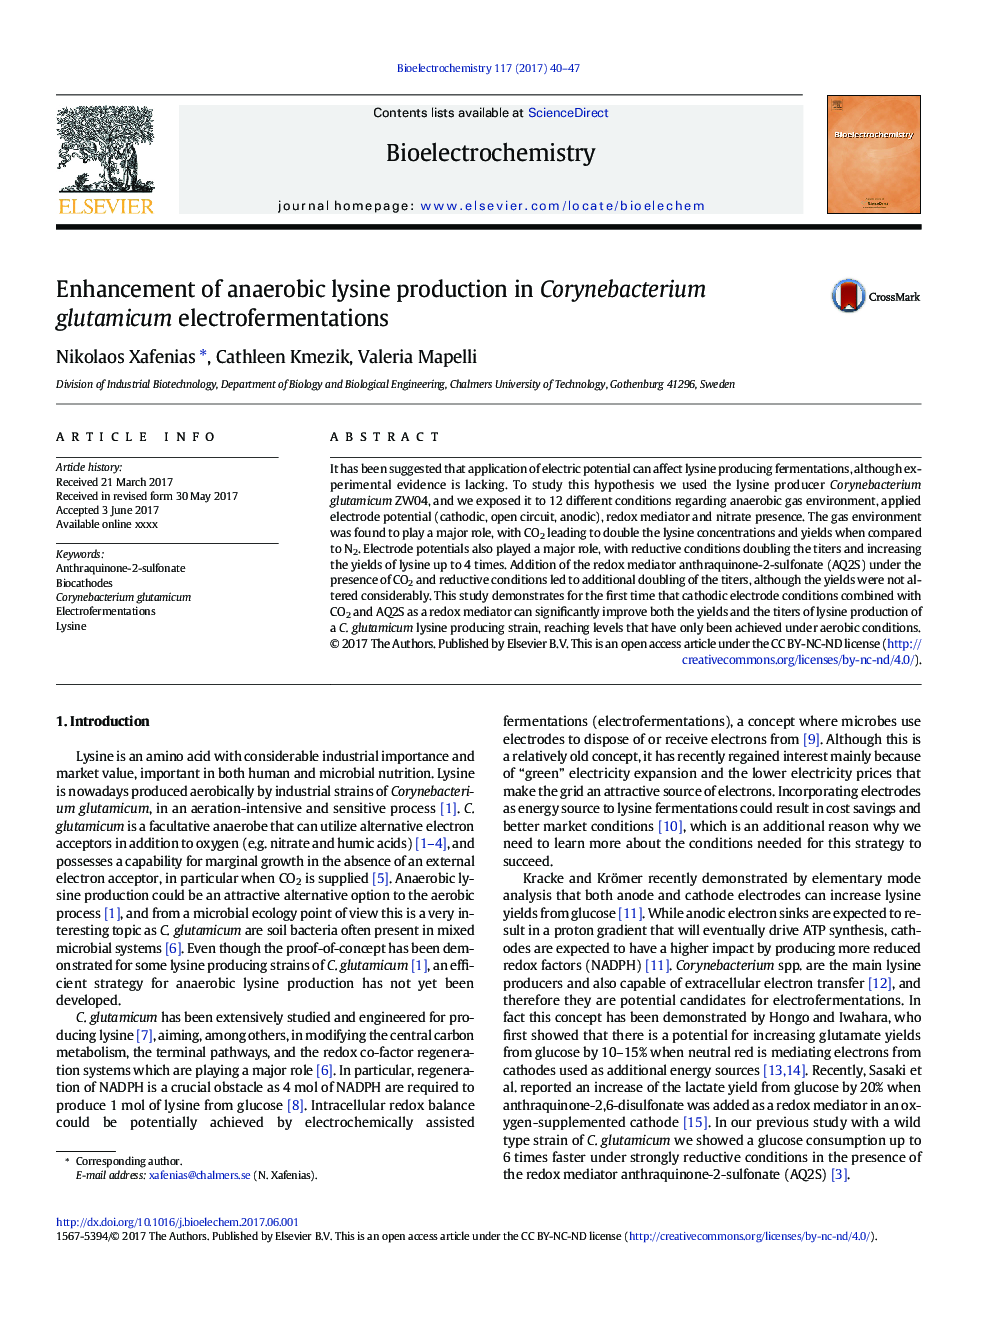 Enhancement of anaerobic lysine production in Corynebacterium glutamicum electrofermentations